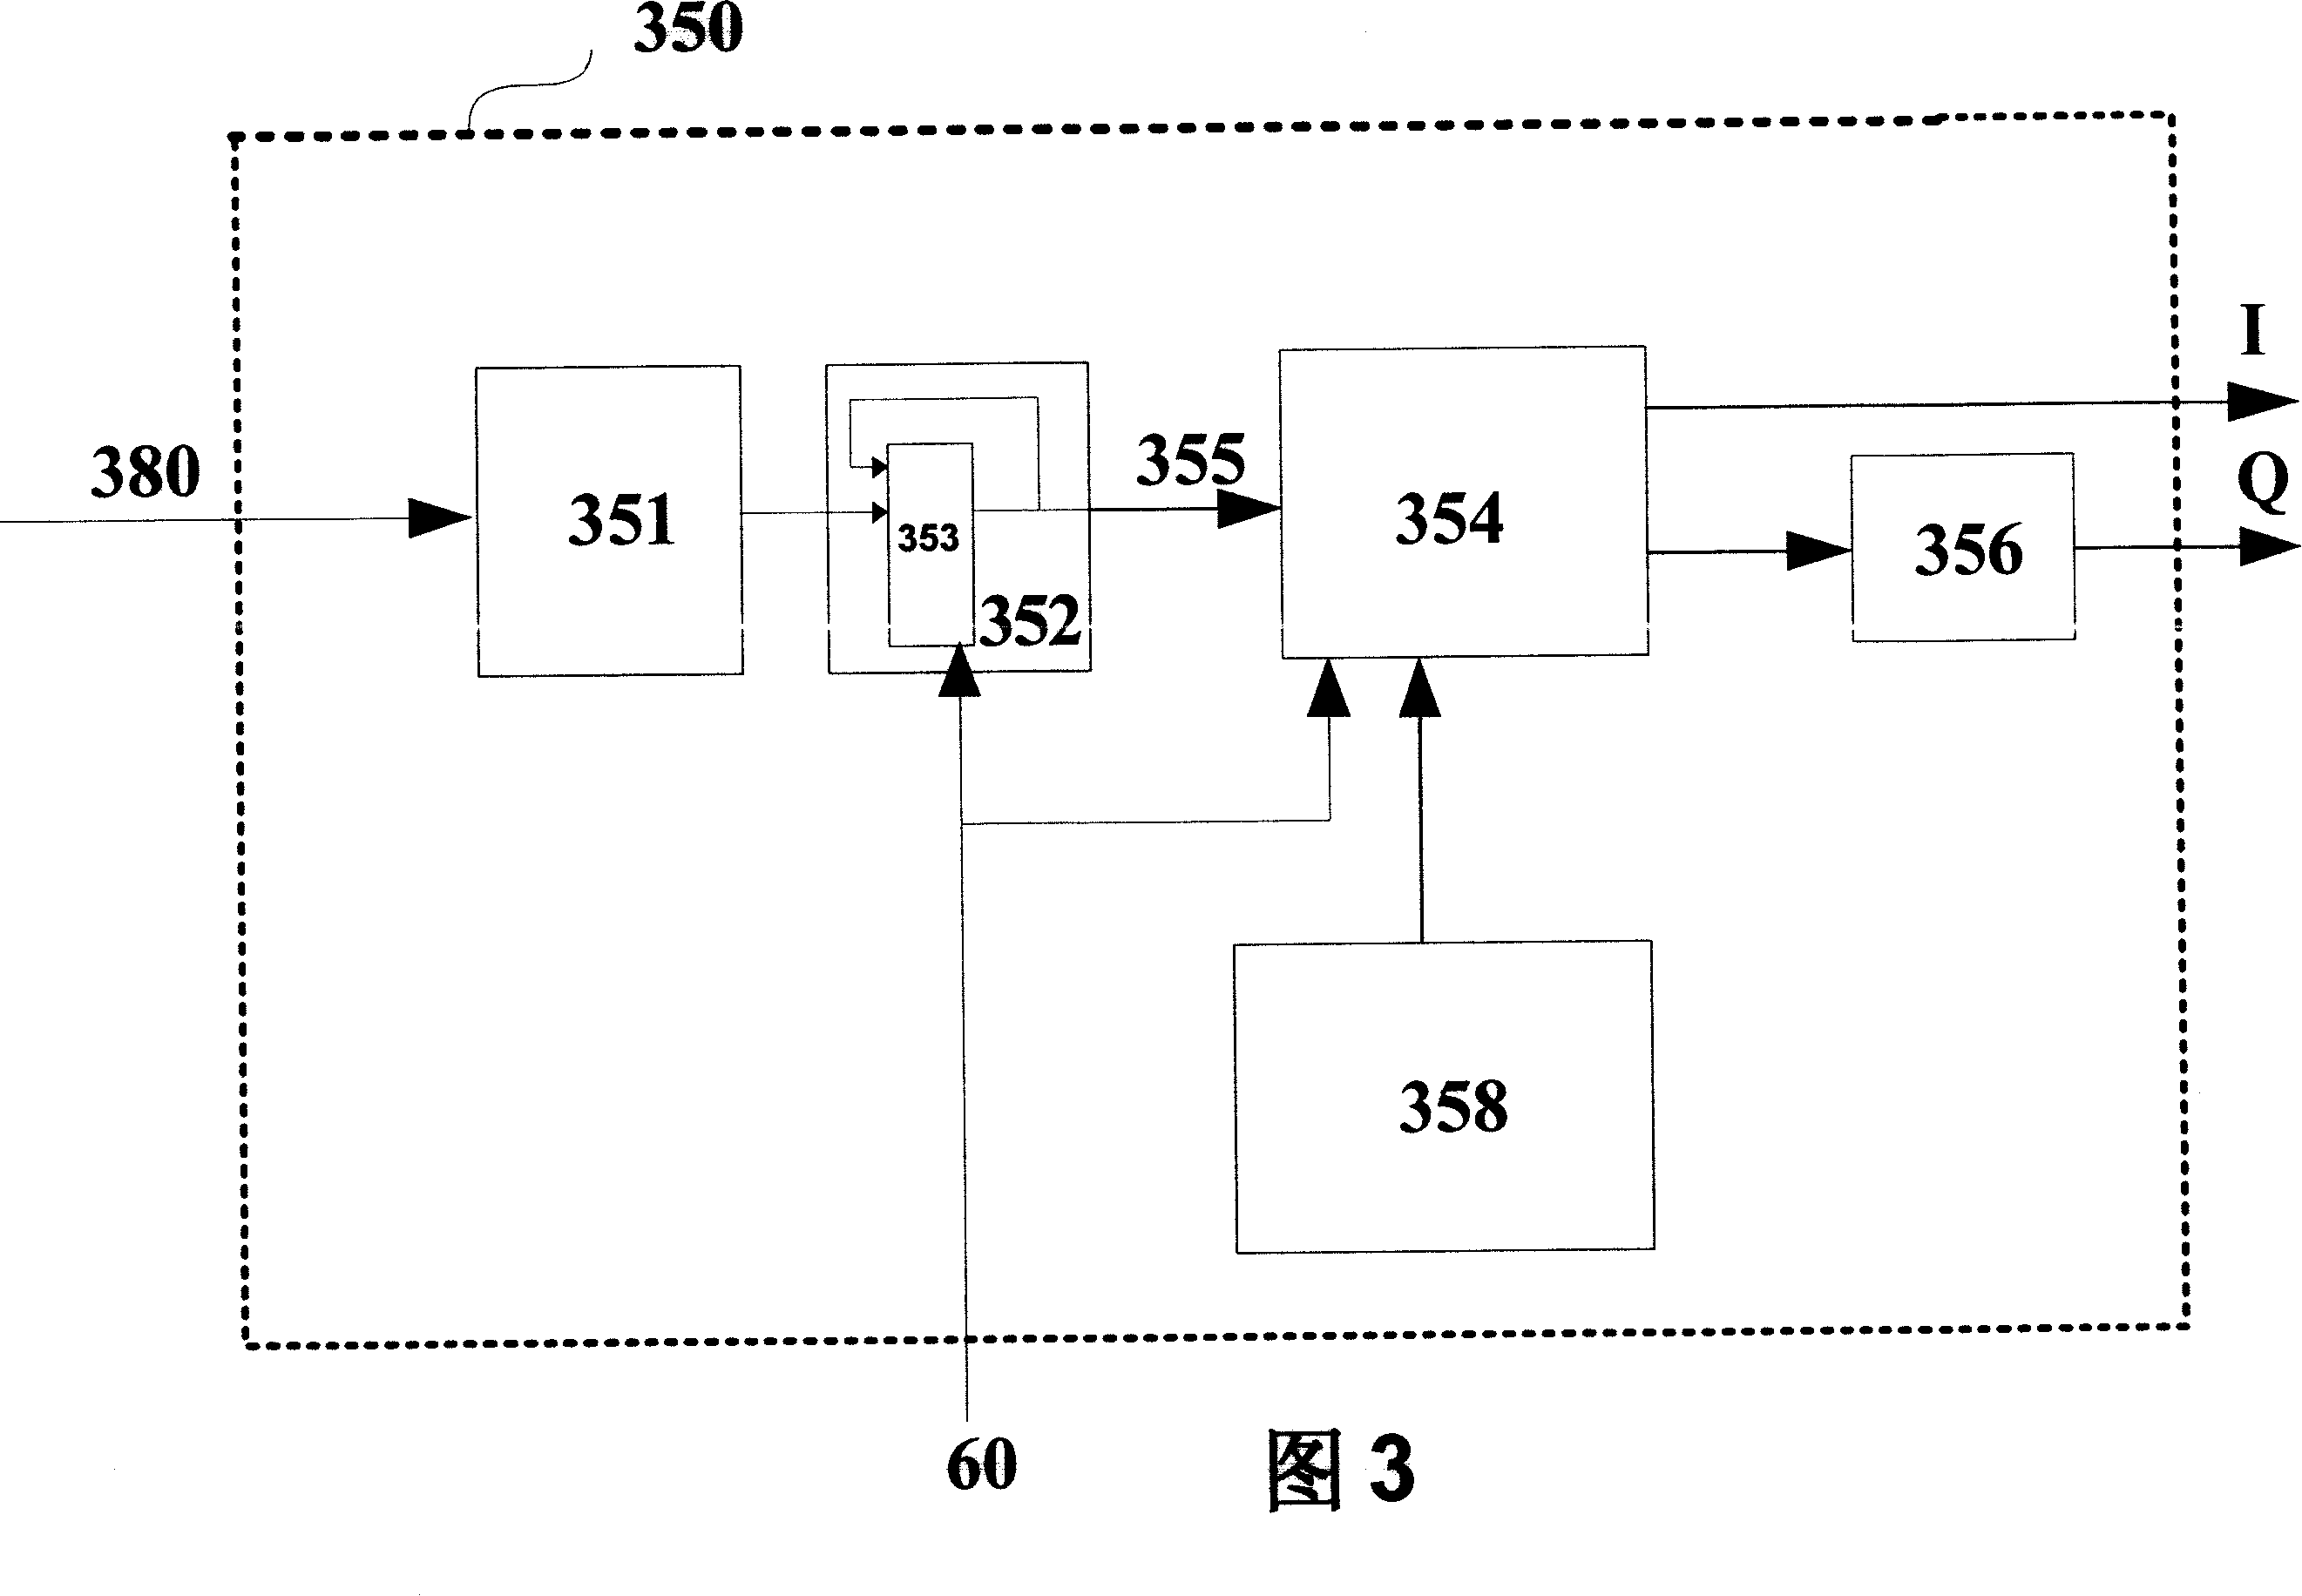 Frequency modulation transmitter